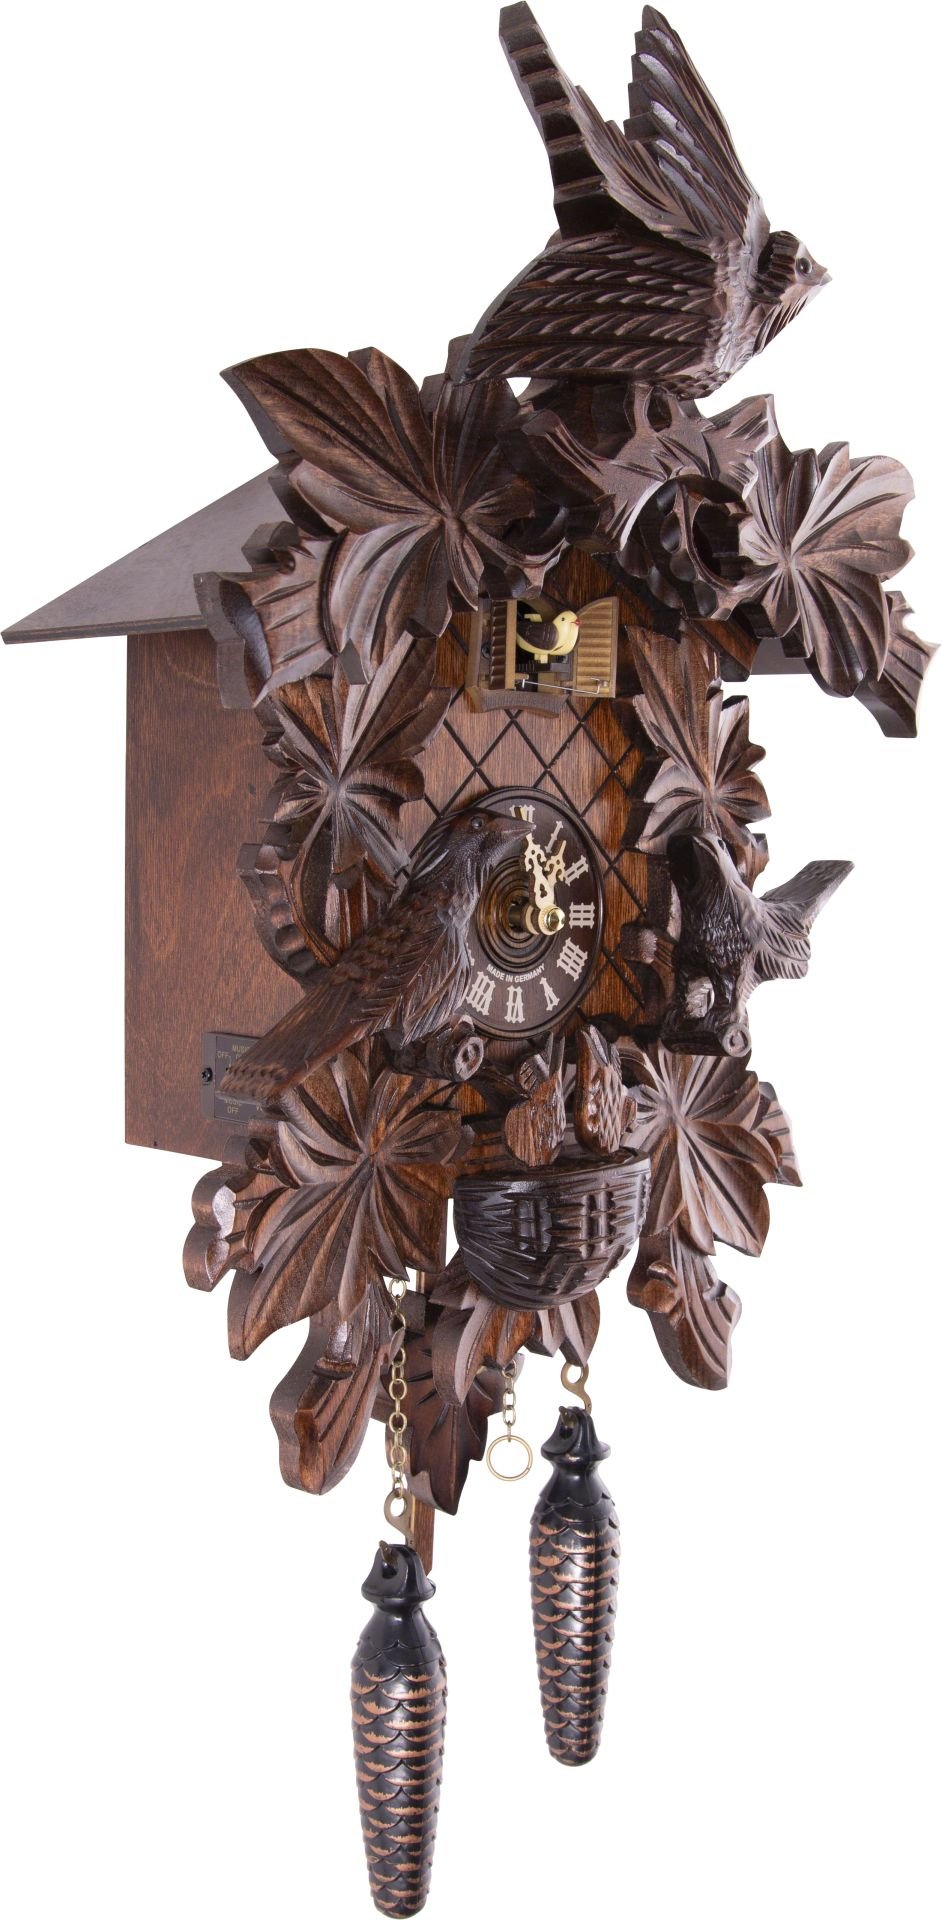 Reloj de cuco estilo “Madera tallada” de cuarzo 46cm de Trenkle Uhren